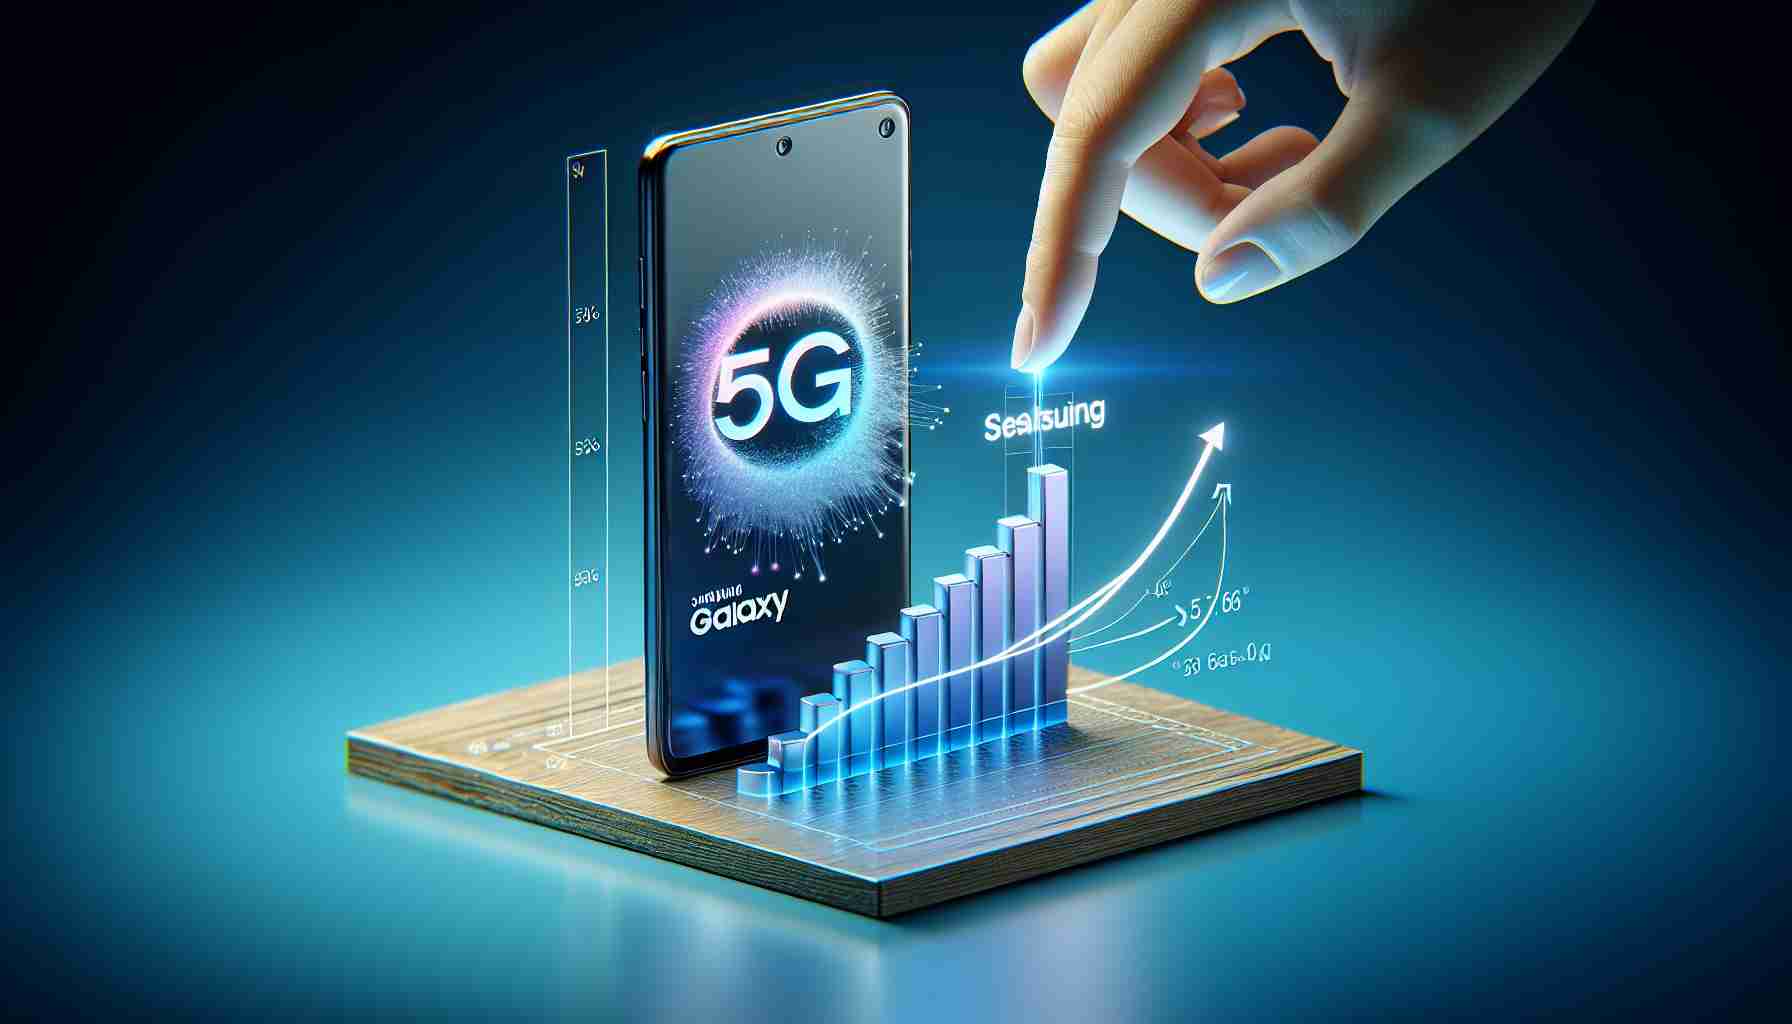 Samsung Galaxy Tops U.S. Consumer Satisfaction Rankings for 5G Smartphones